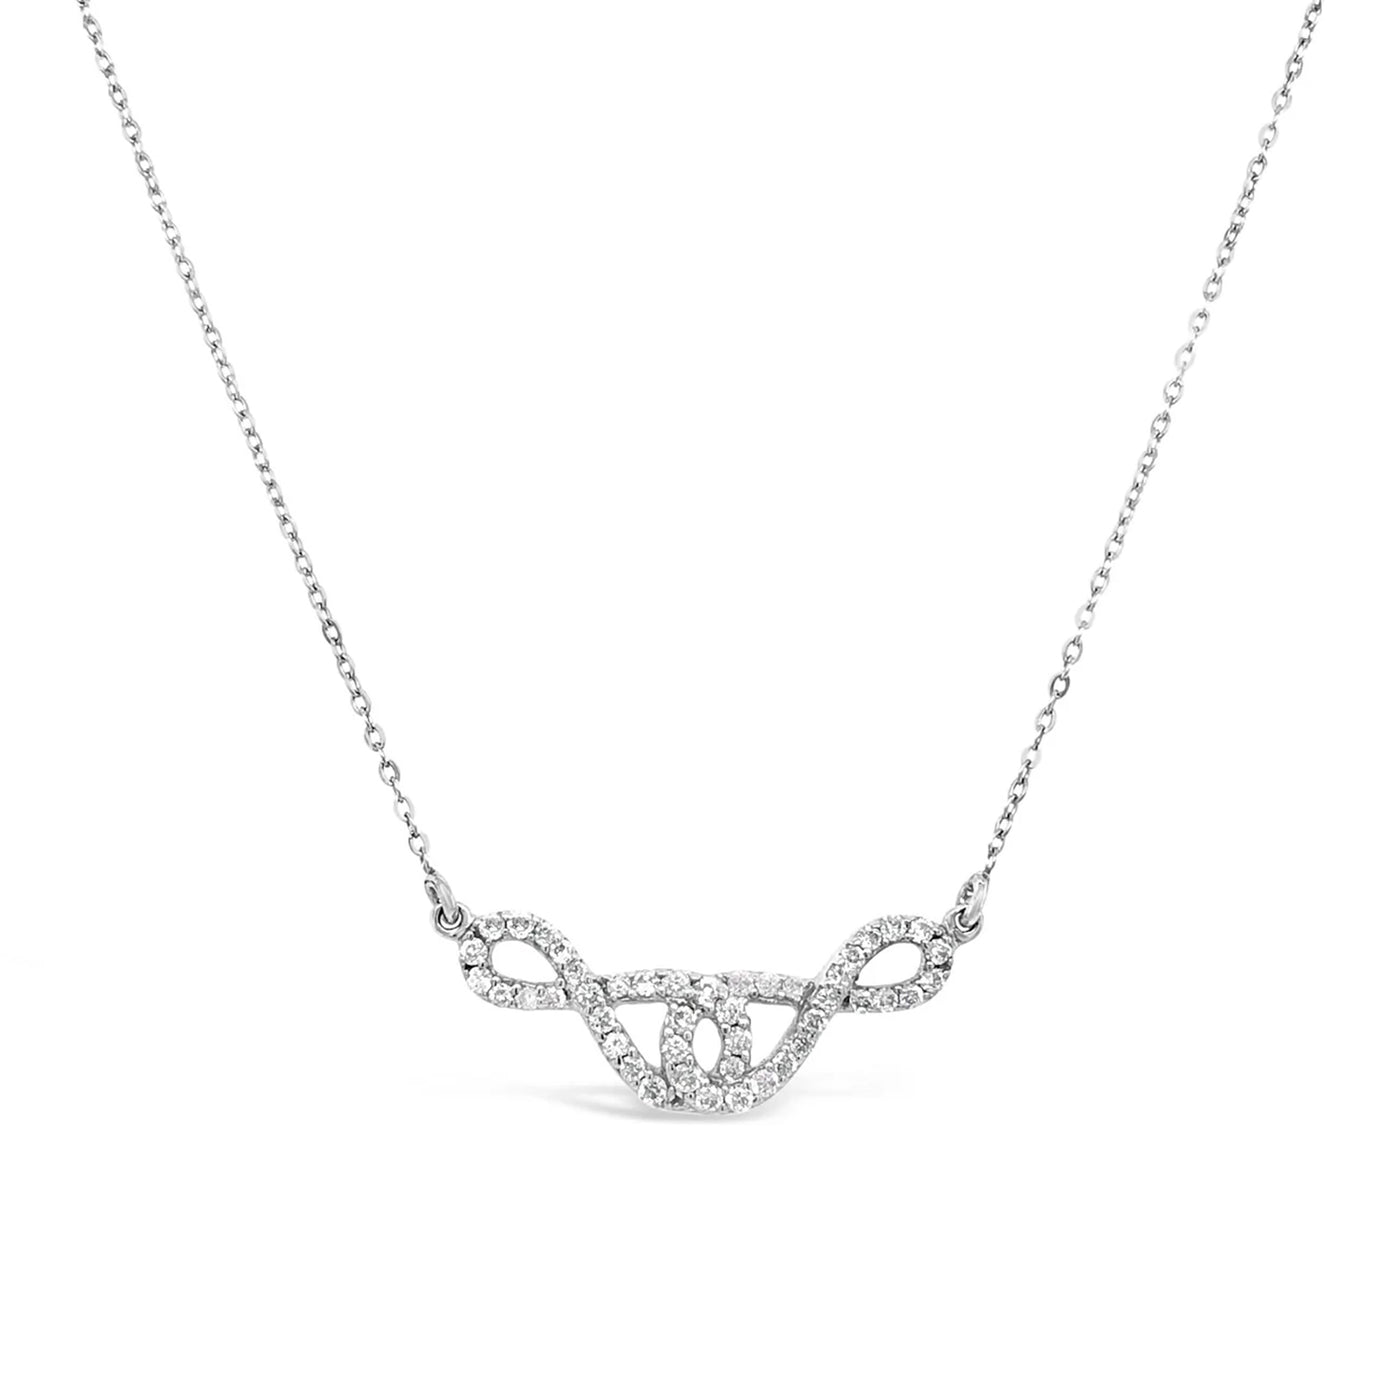 White Gold Diamond Double Infinity Necklace